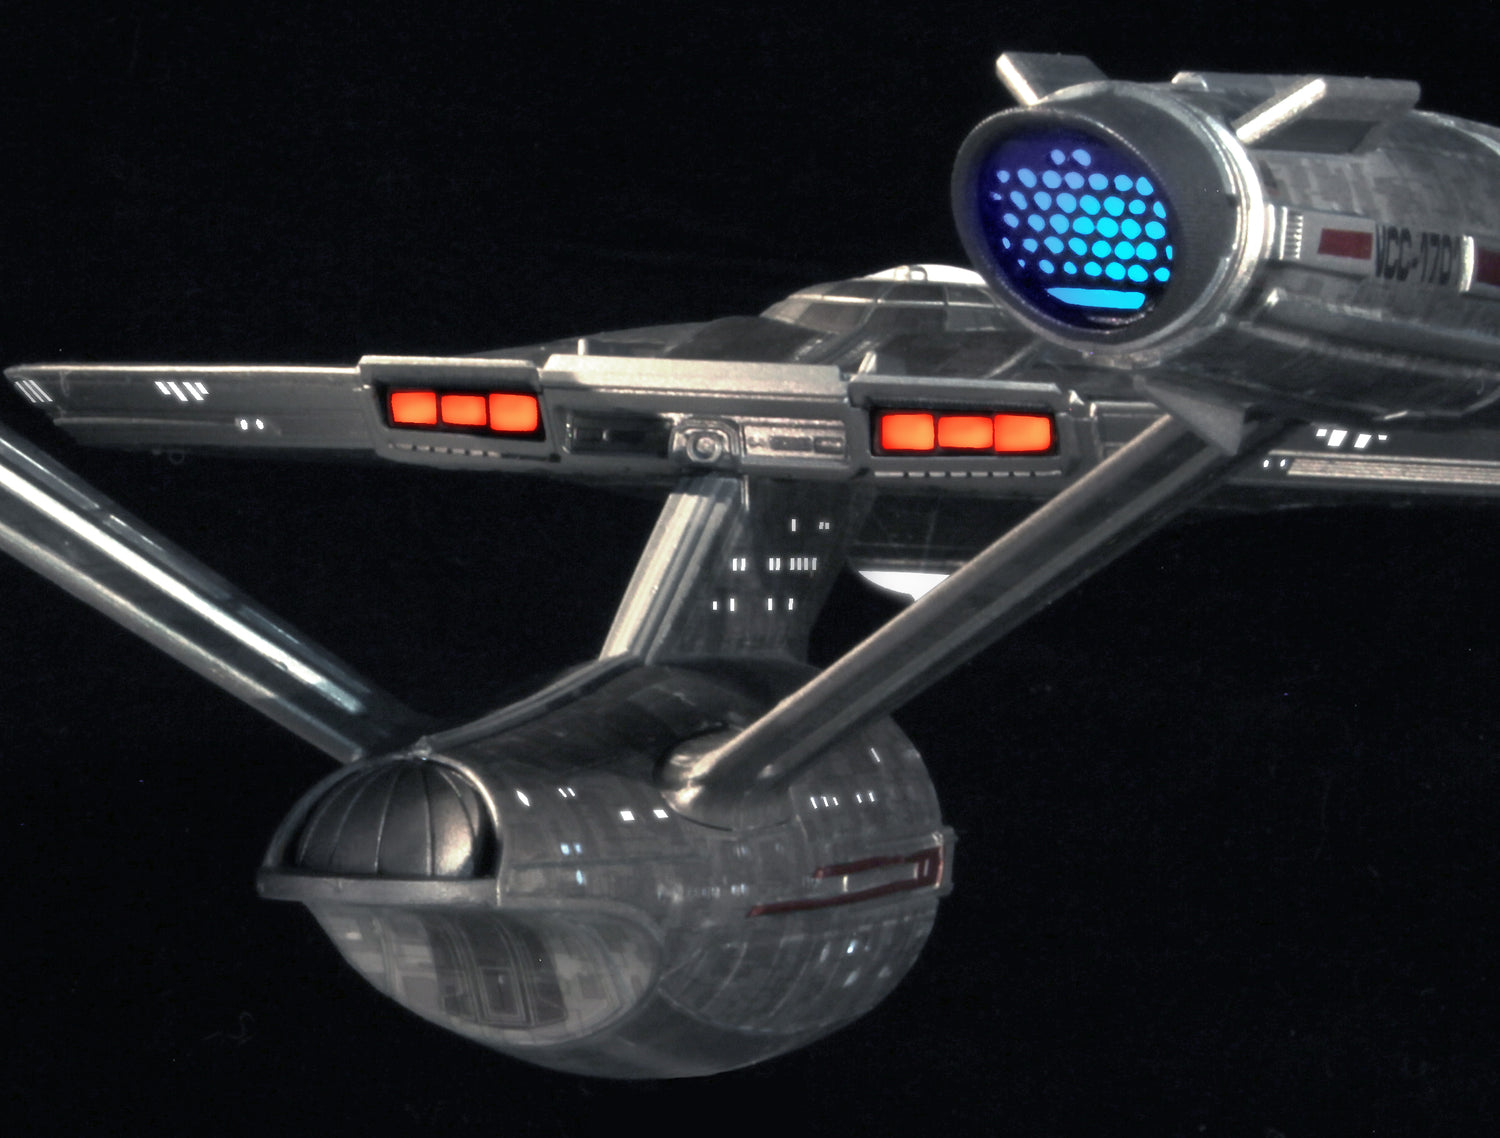 Polar Lights Star Trek Discovery U.S.S Enterprise NCC-1701 Light Kit 1:1000 Scale